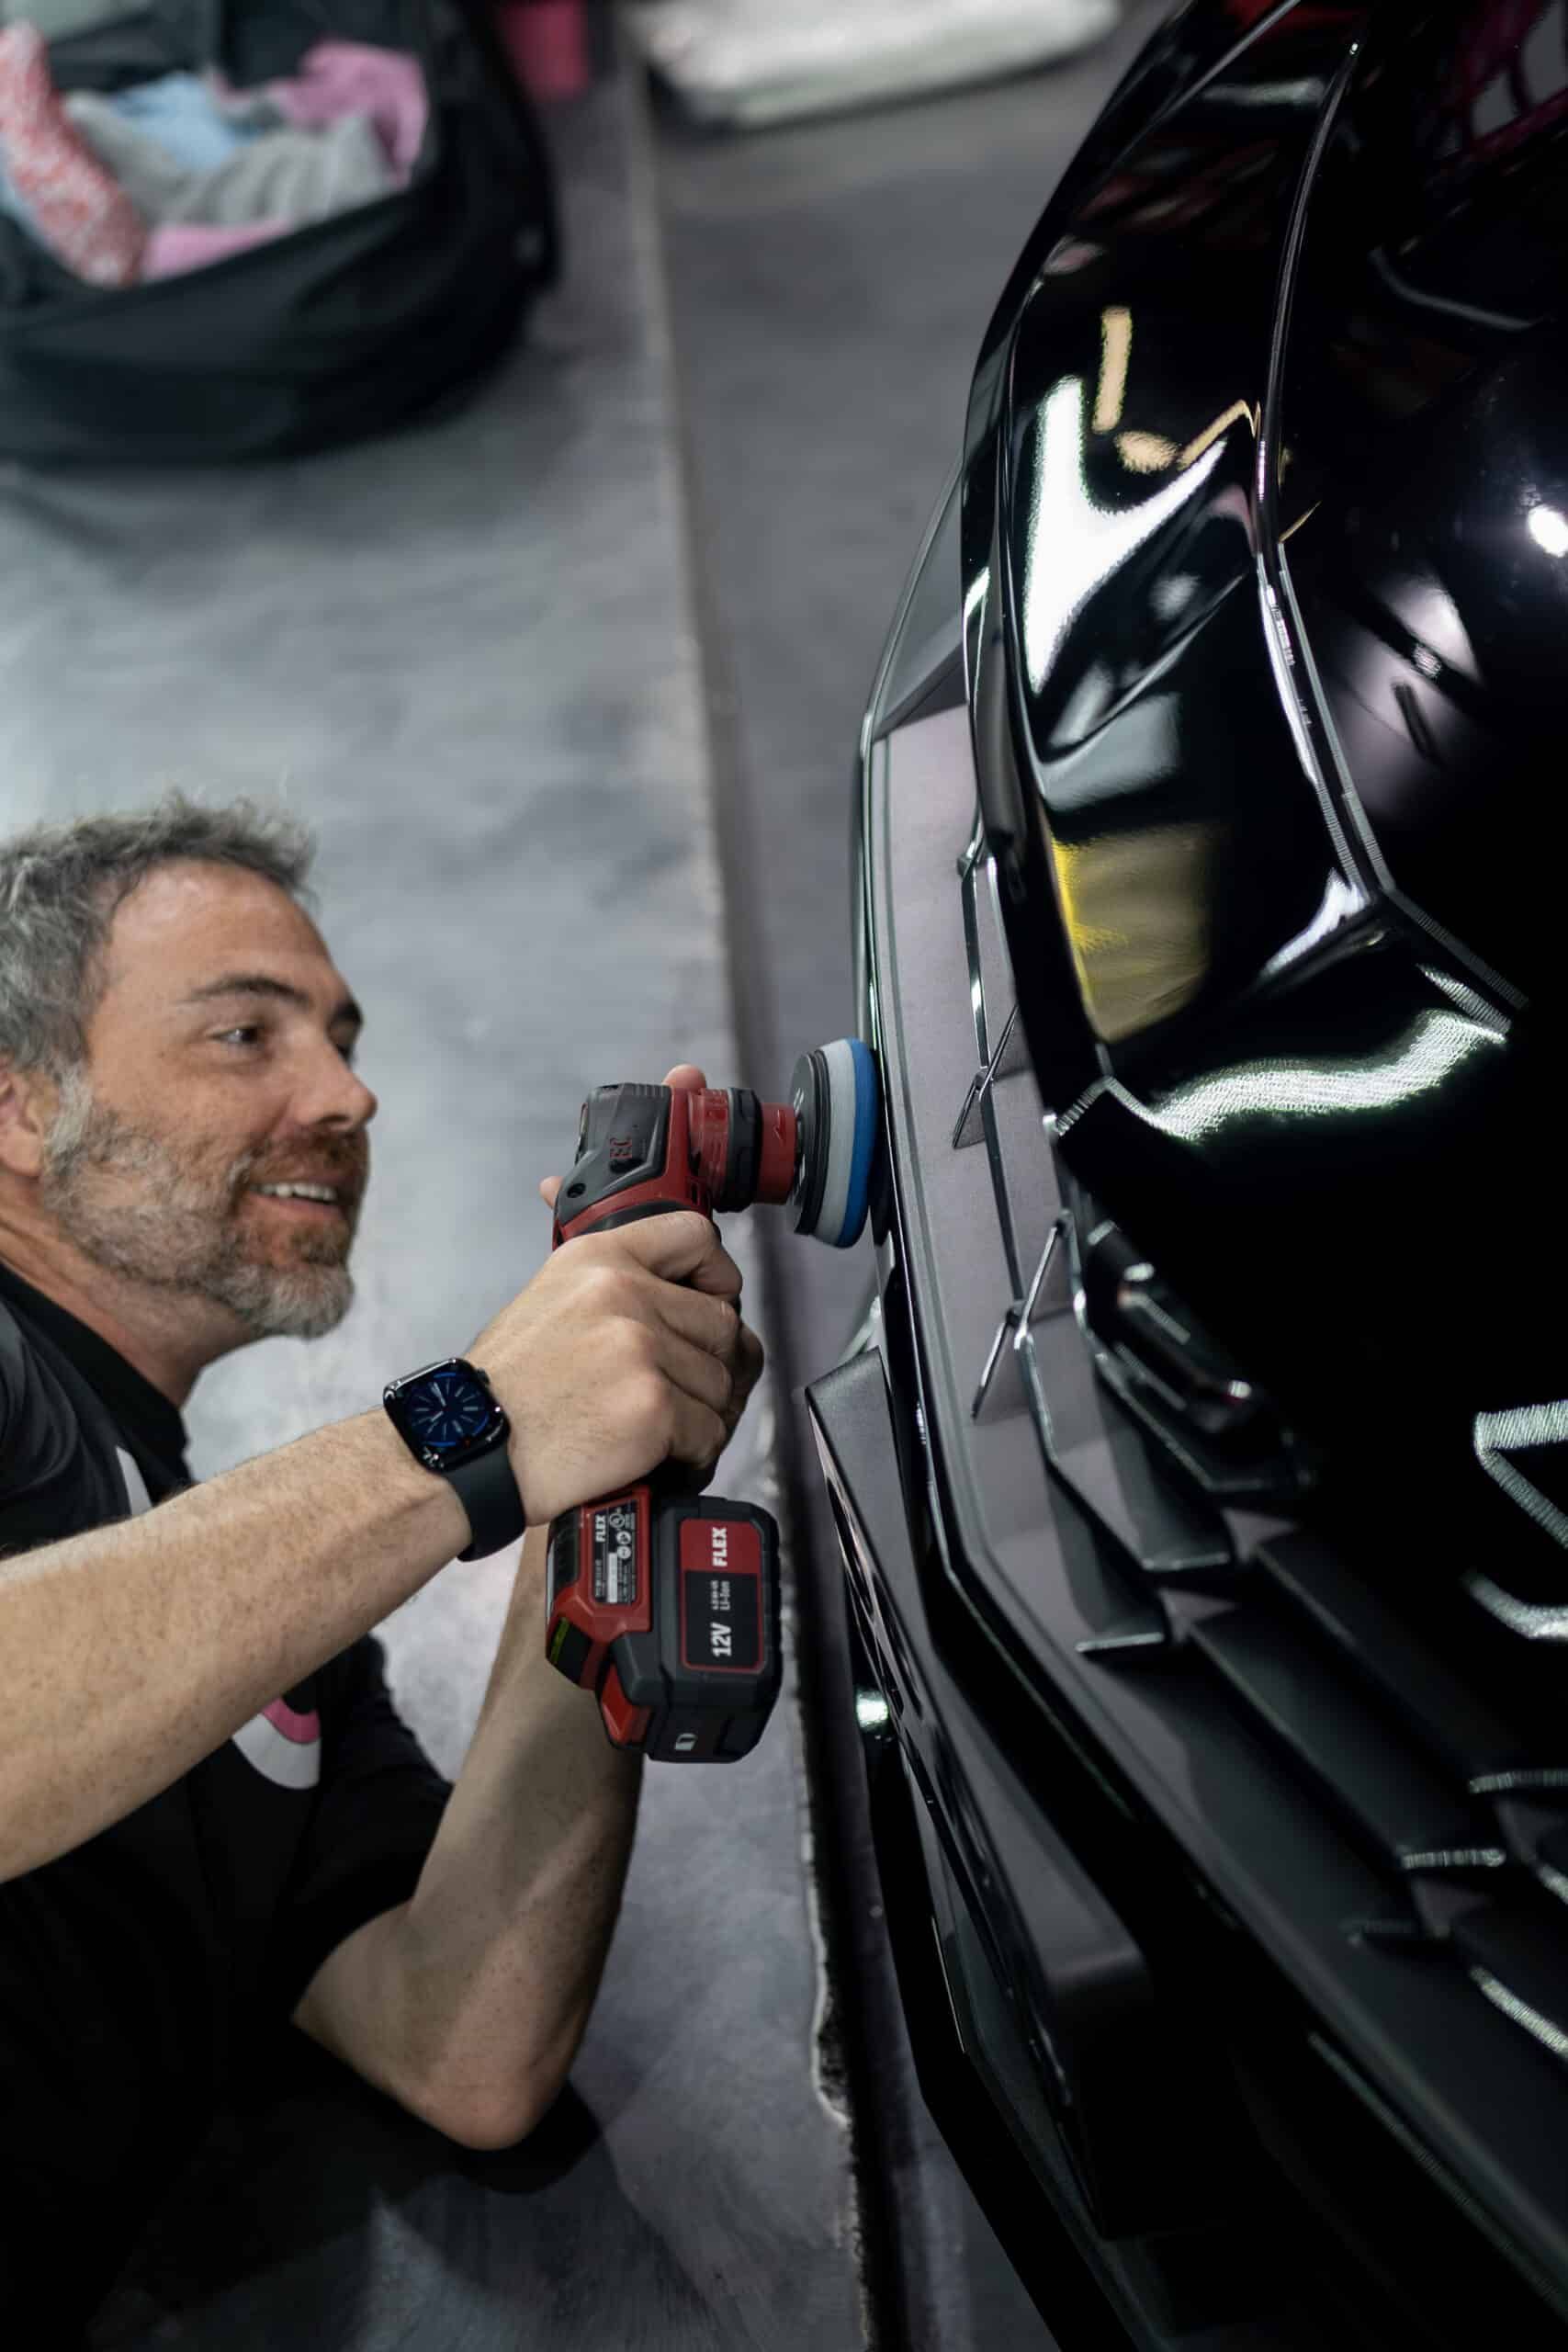 A man is polishing a black car with a drill.